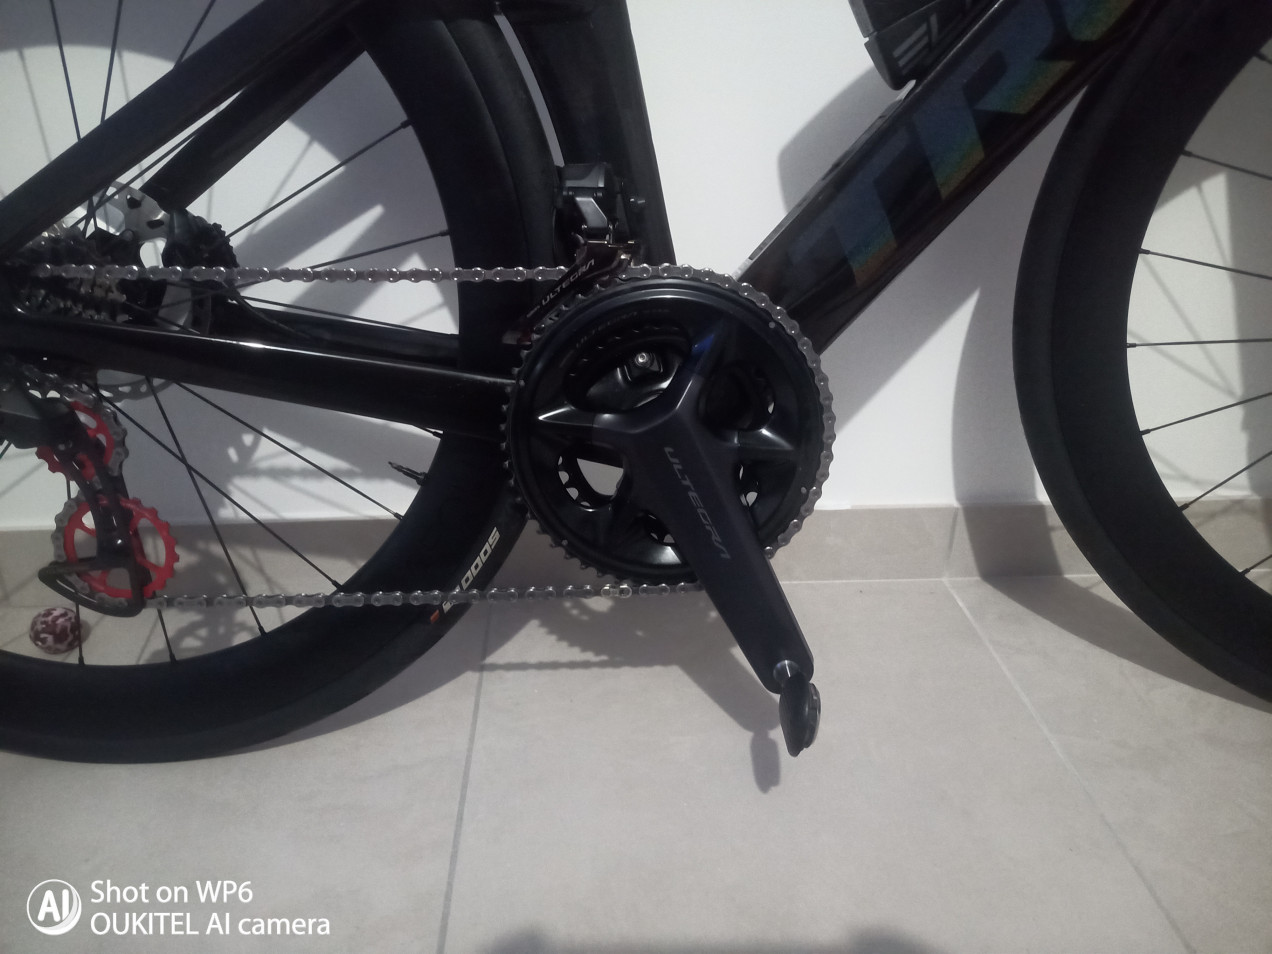 Trek Speed Concept SLR 7 used in m | buycycle